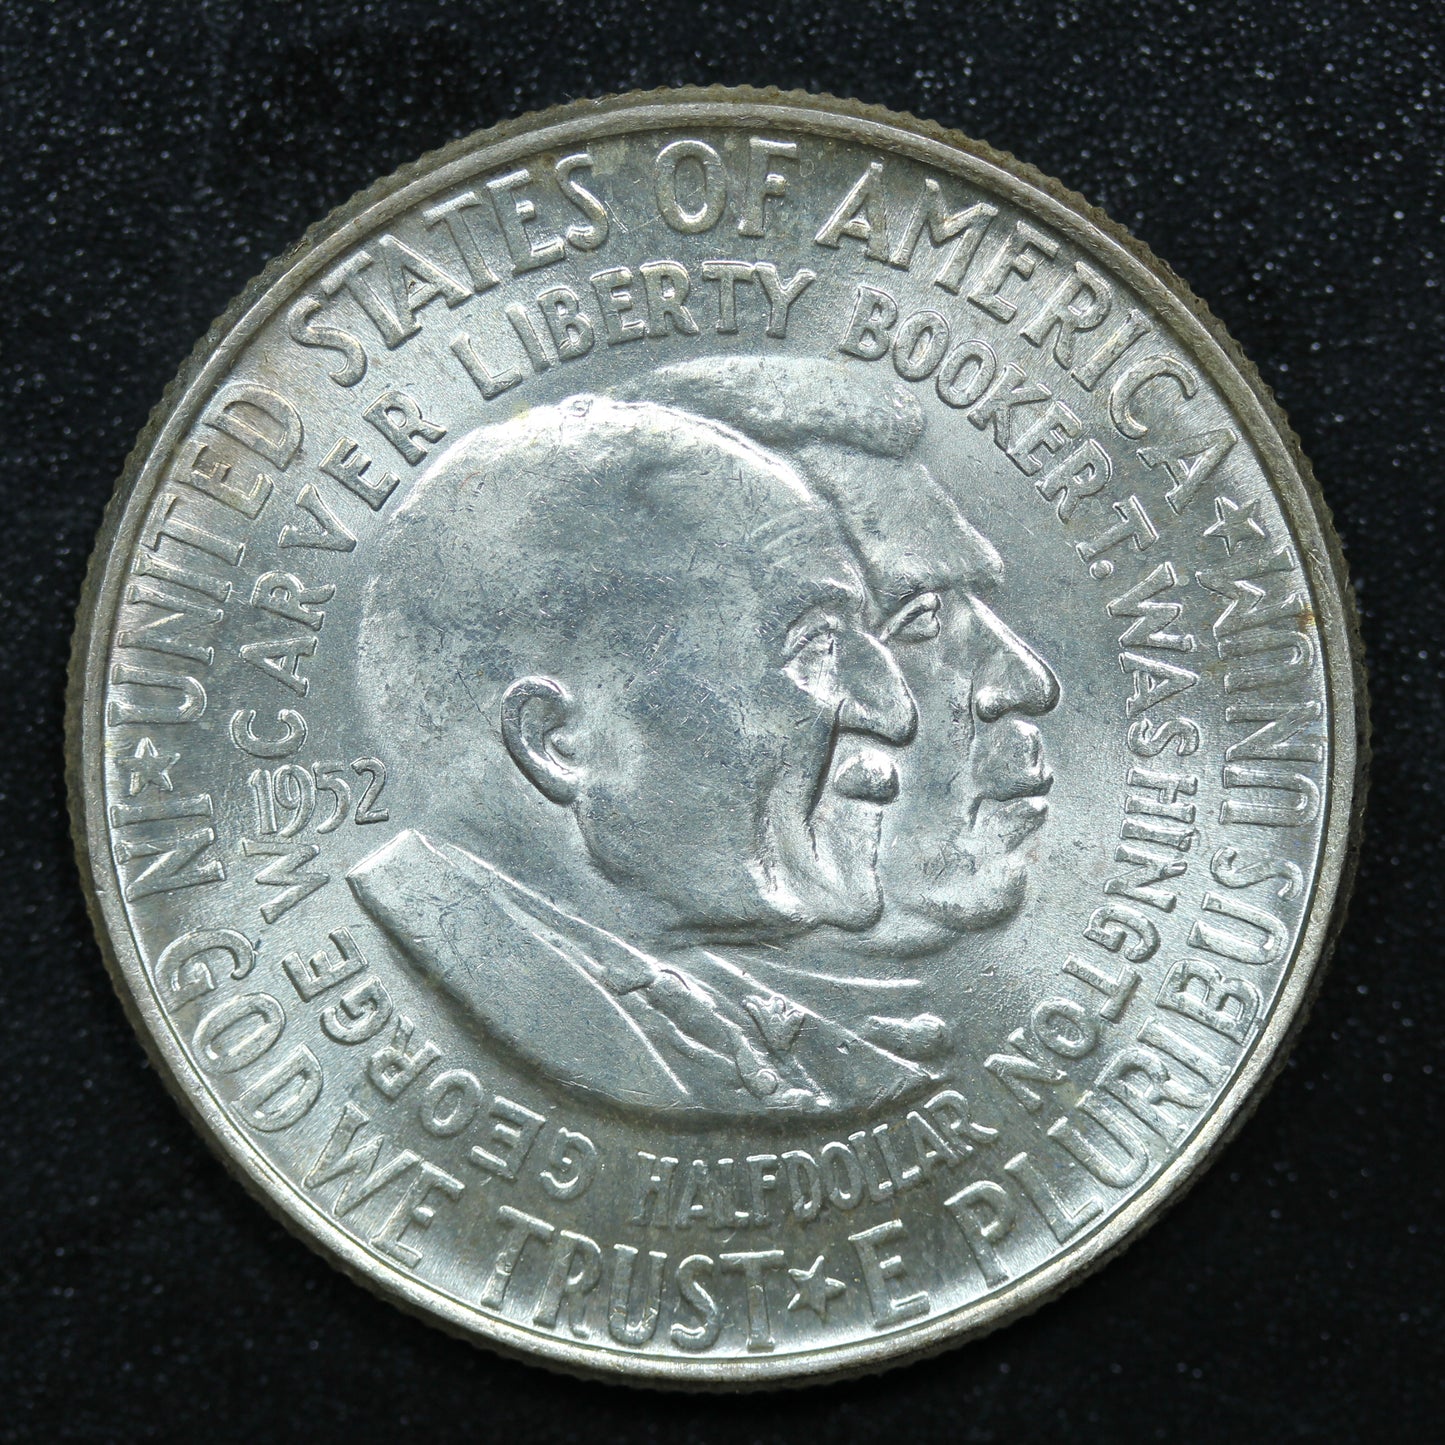 1952 Carver Washington Commemorative Silver Half Dollar